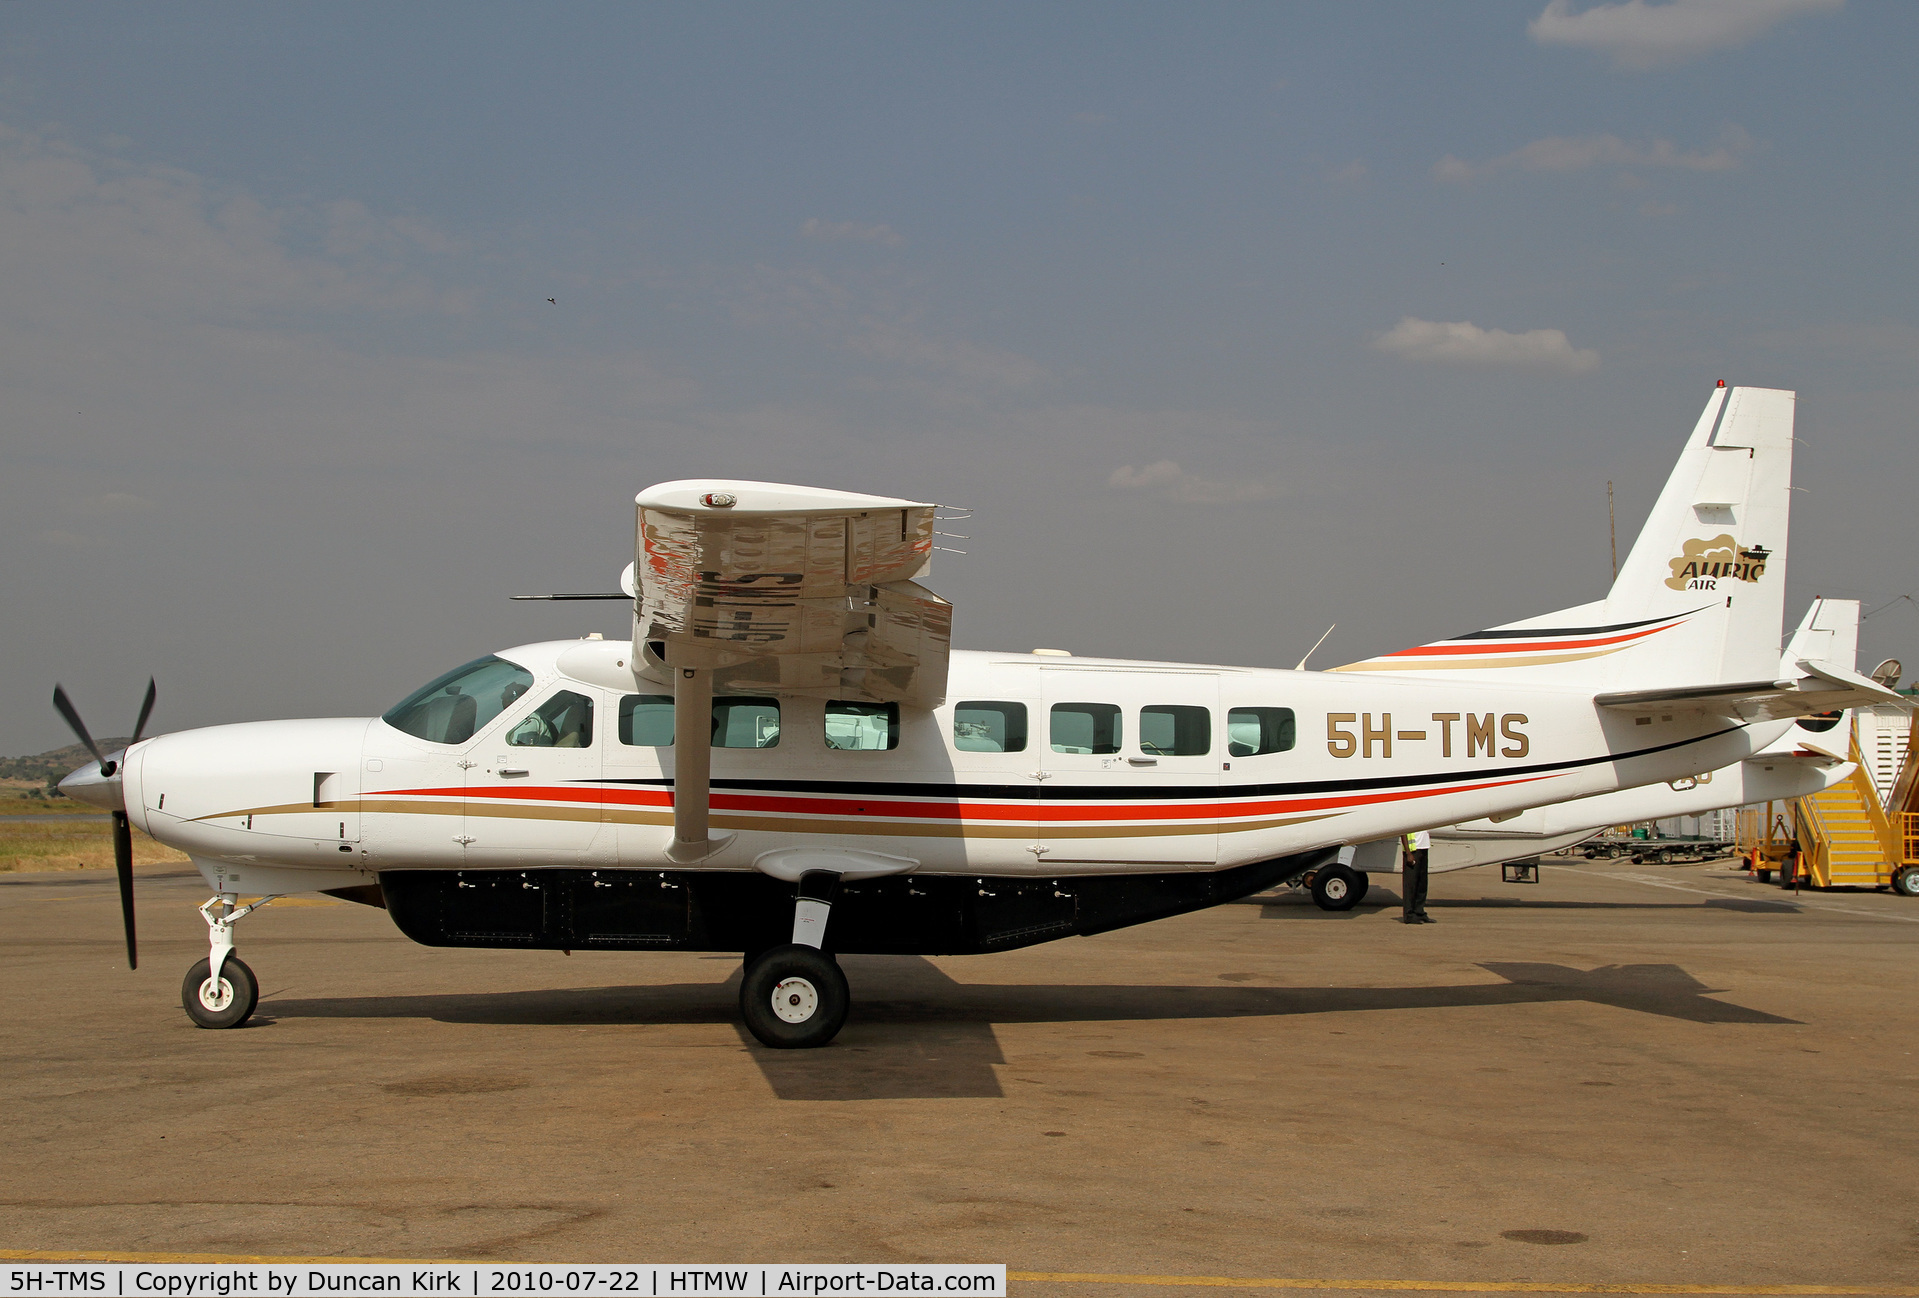 5H-TMS, 2008 Cessna 208B Grand Caravan C/N 208B-2055, Just arrived at Mwanza